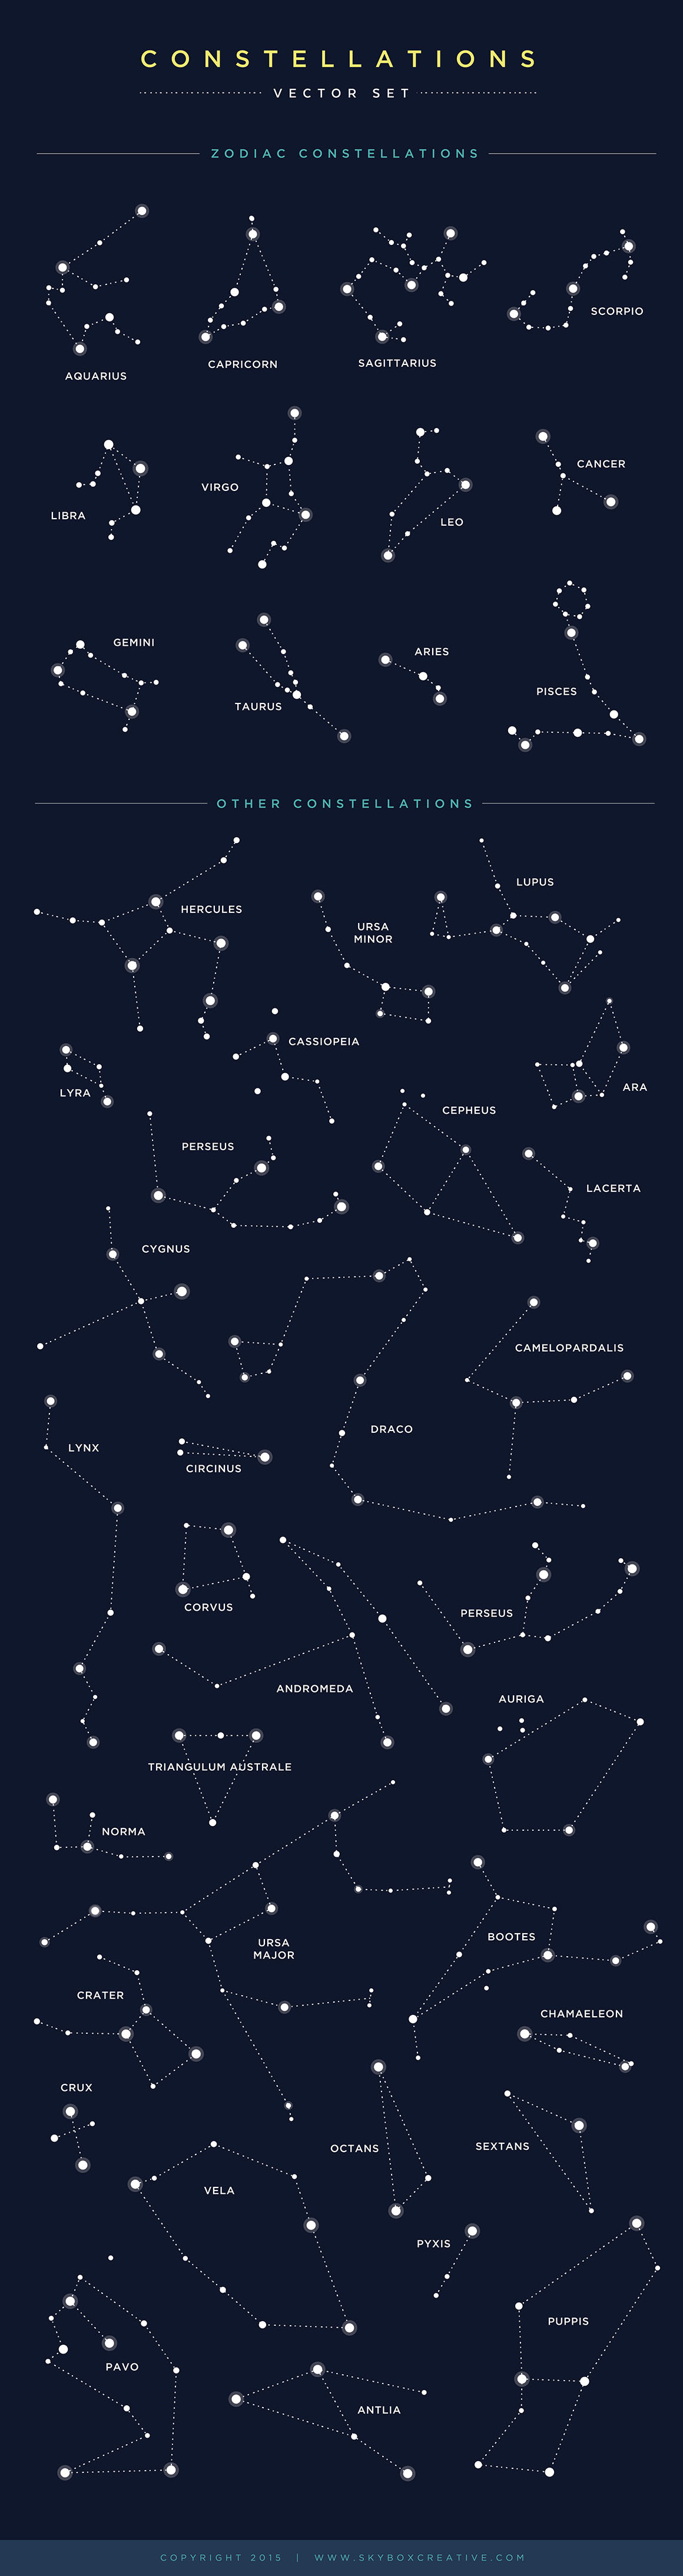 Constellations-Vol-1-2.jpg